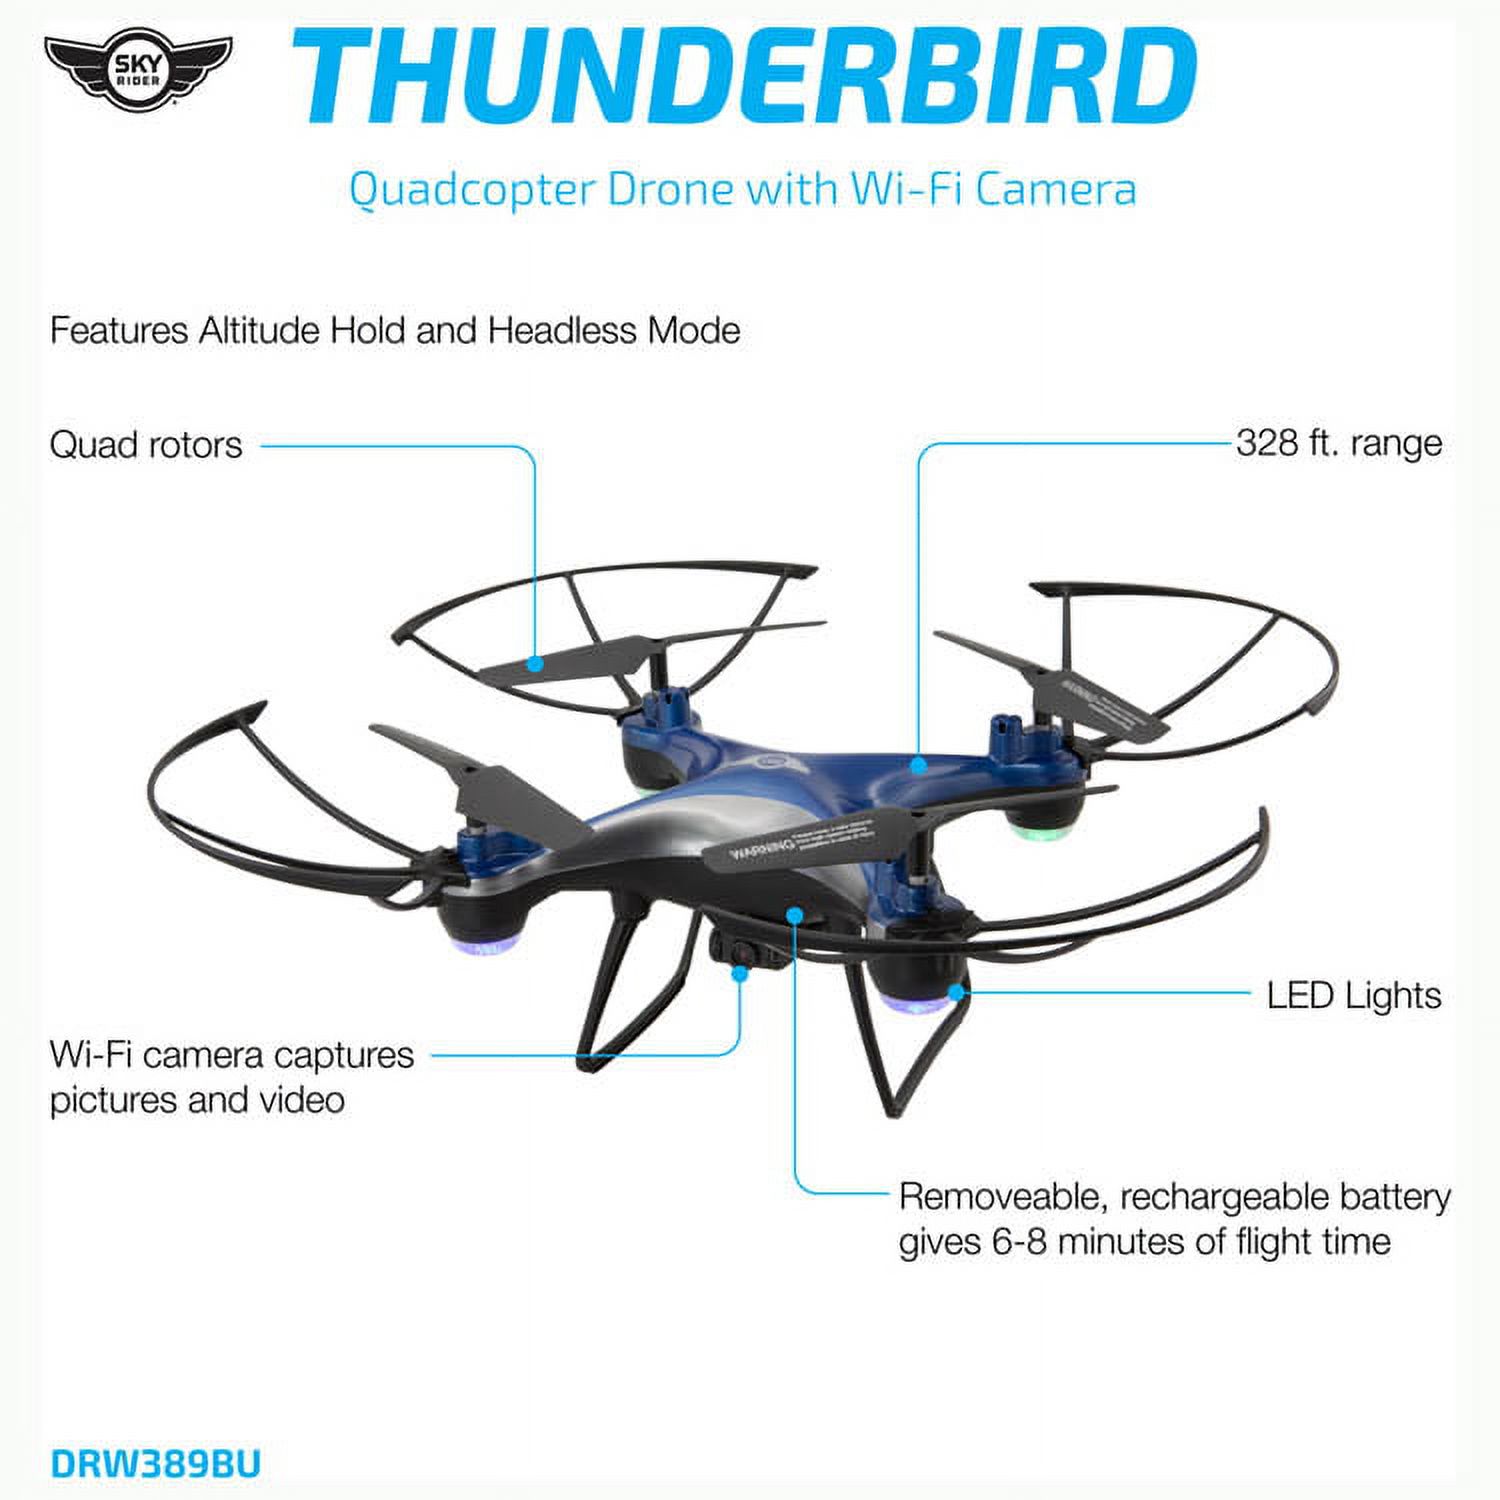 Sky Rider Thunderbird Quadcopter Drone with Wi-Fi Camera, DRW389, Black - image 2 of 5